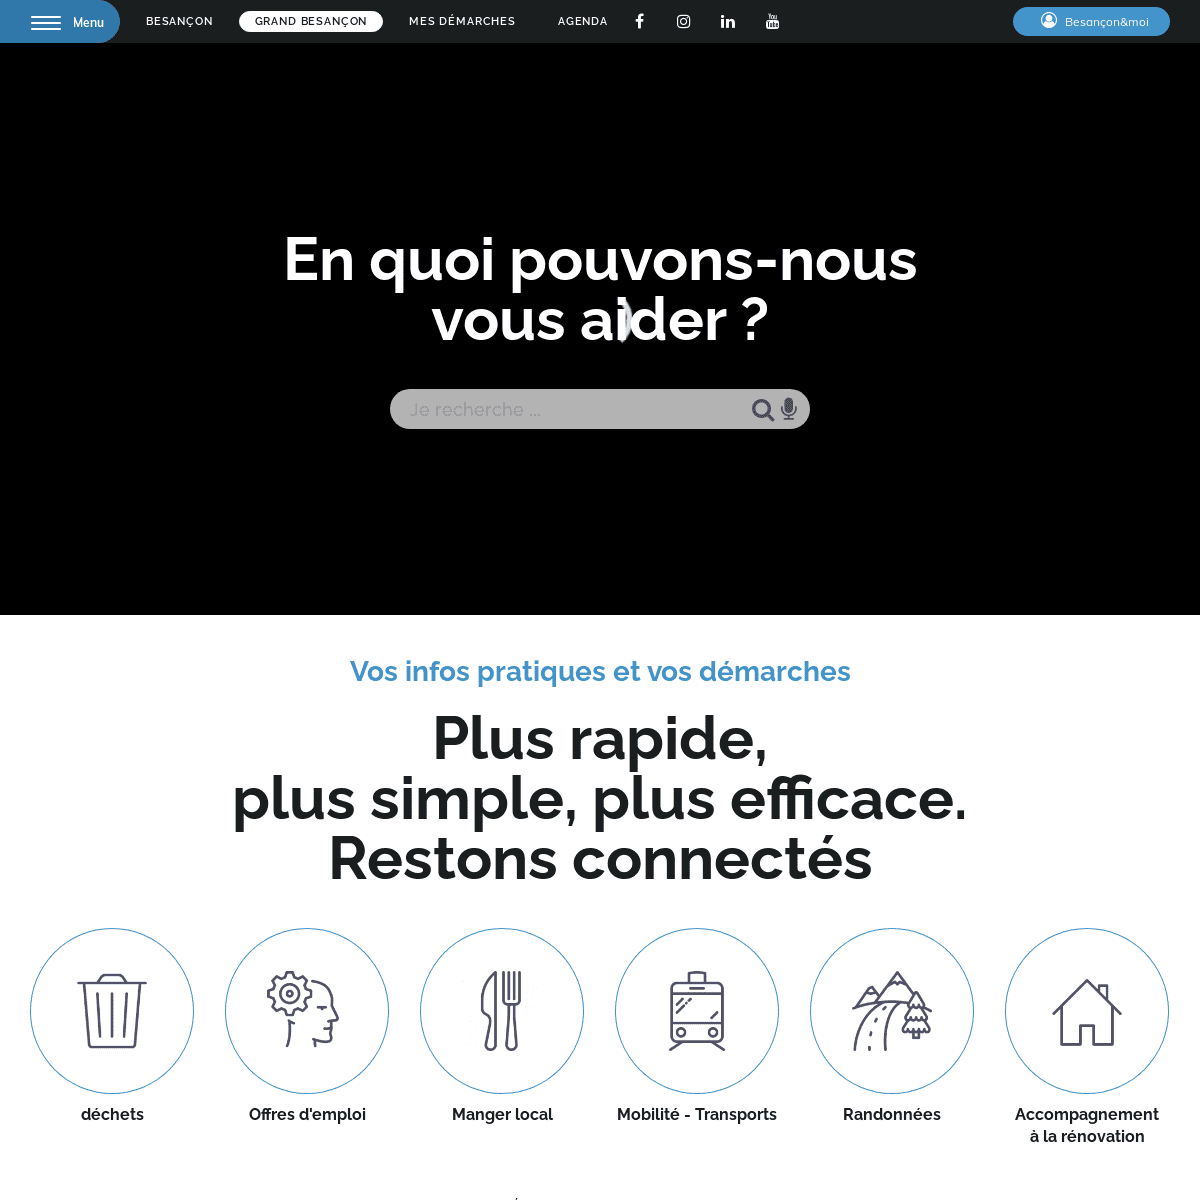 A complete backup of https://grandbesancon.fr